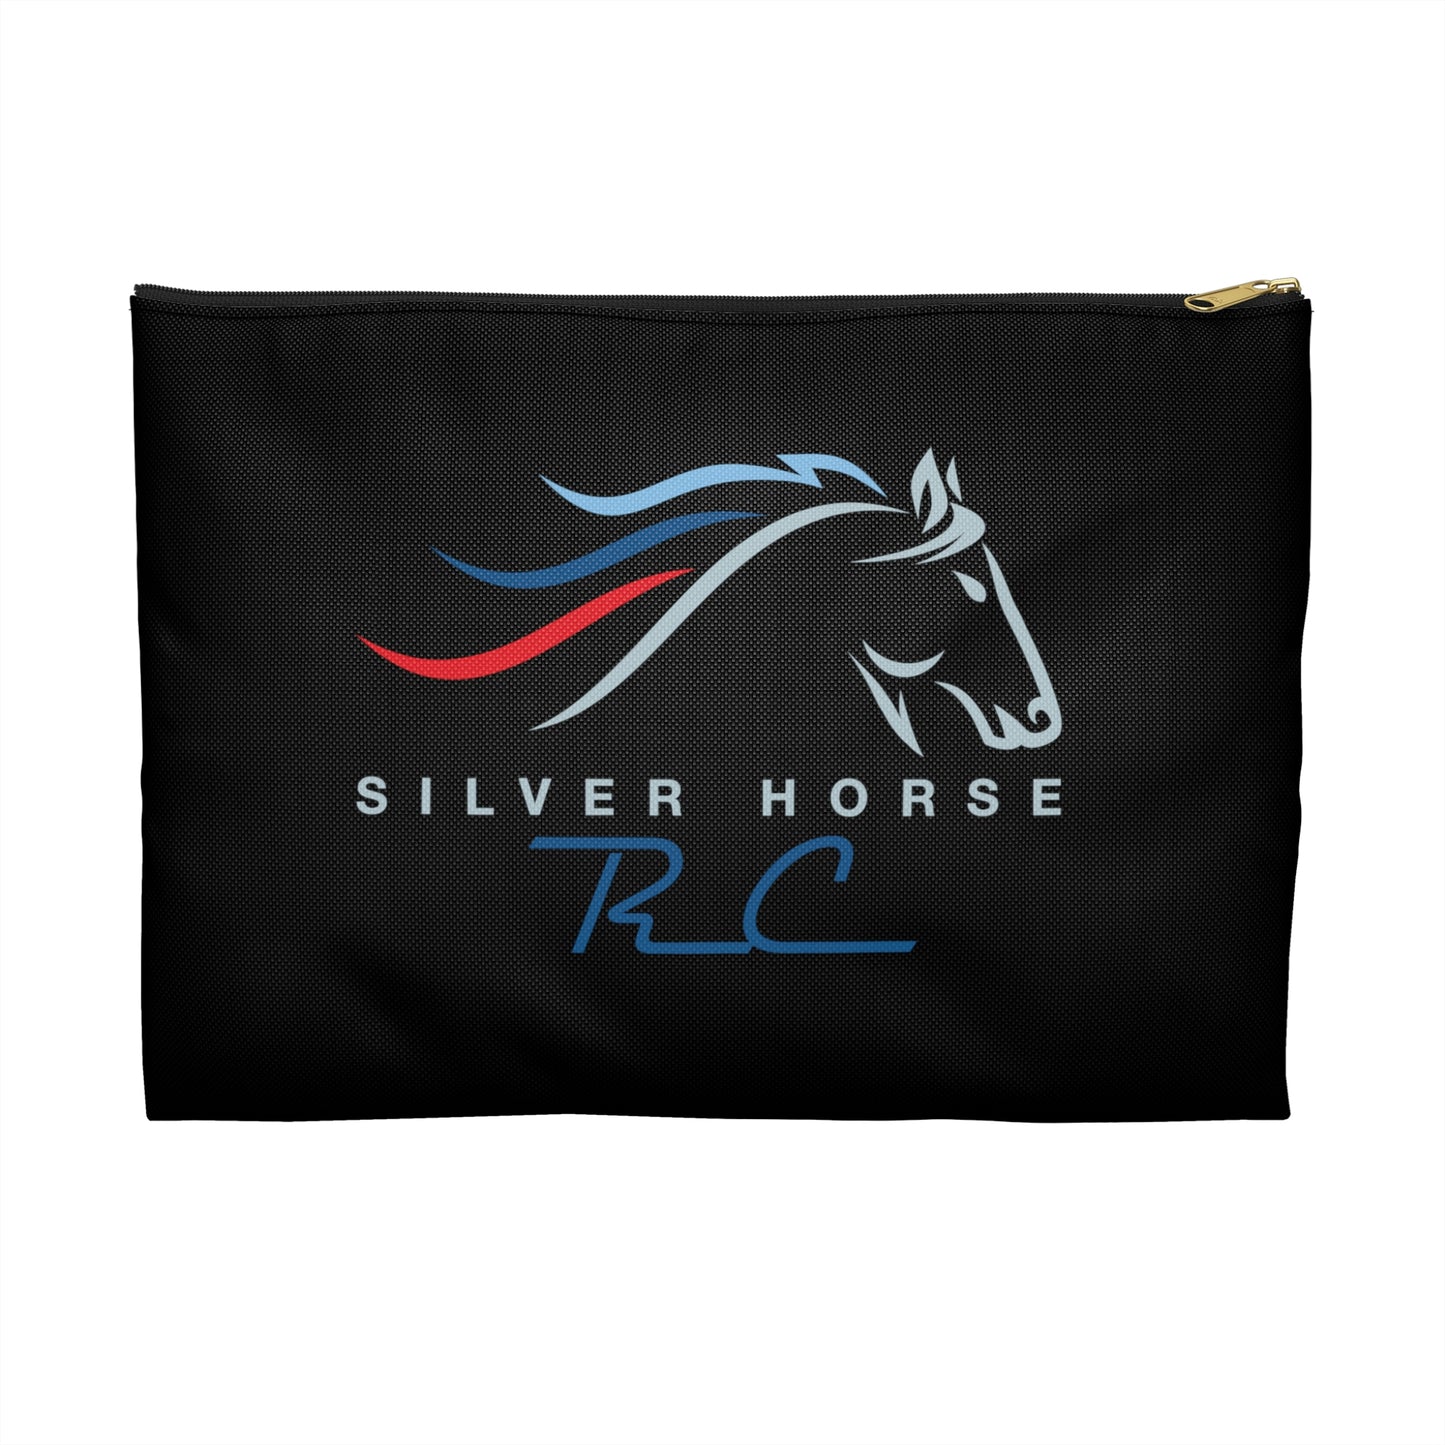 Silver Horse RC Pit Stacker Bag / Pit Storage Bag